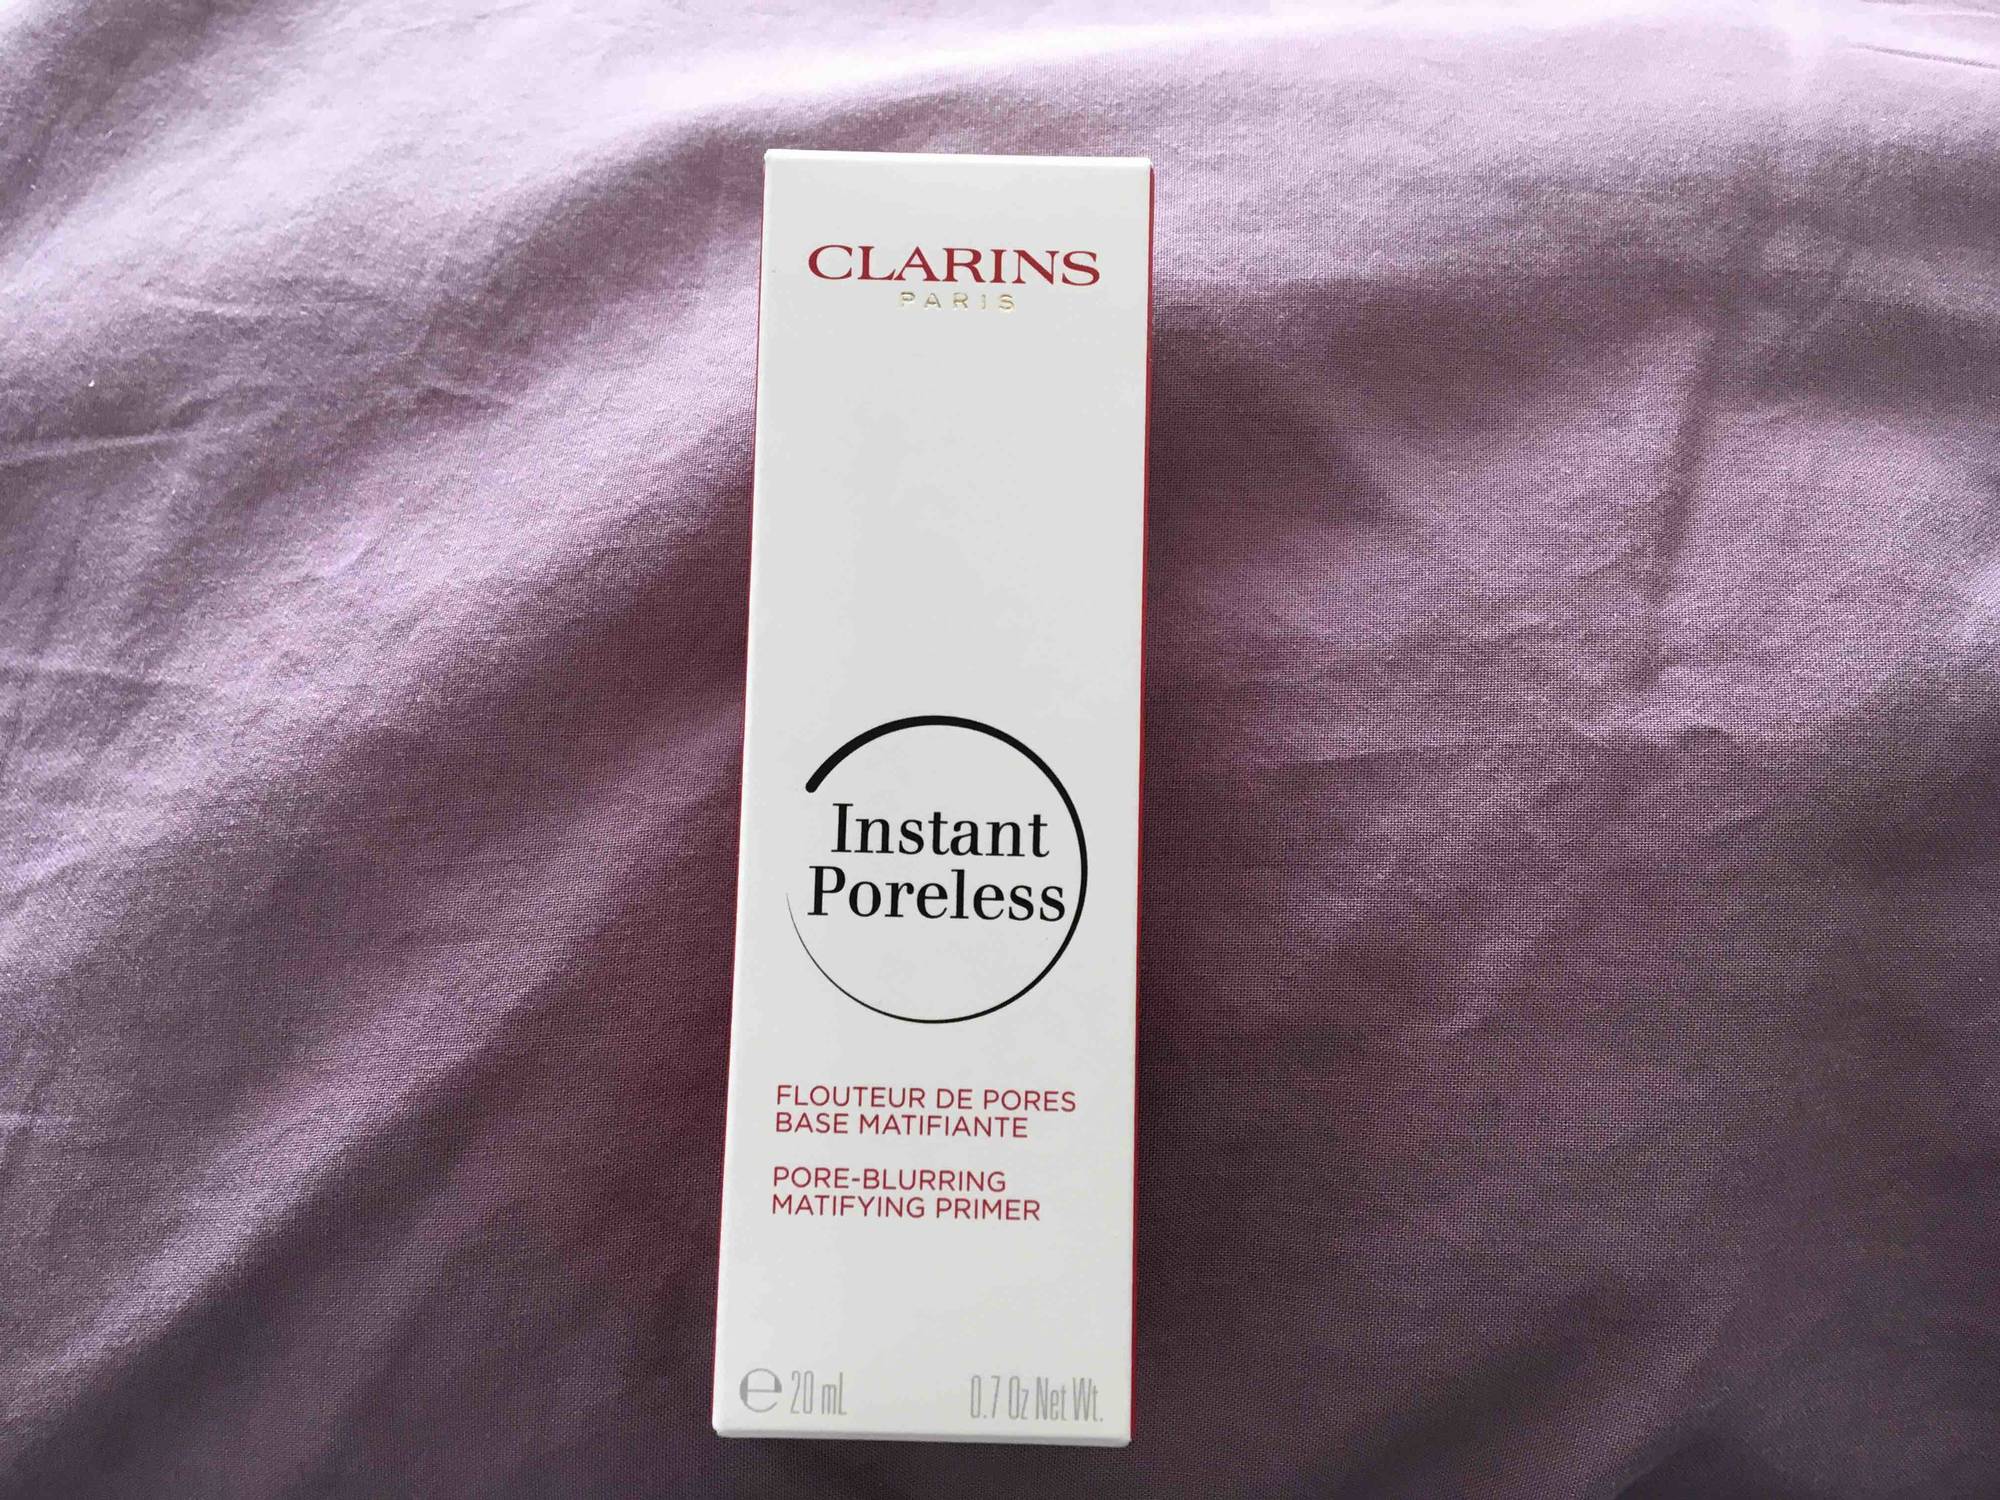 CLARINS - Instant Poreless - Flouteur de pores base matifiante